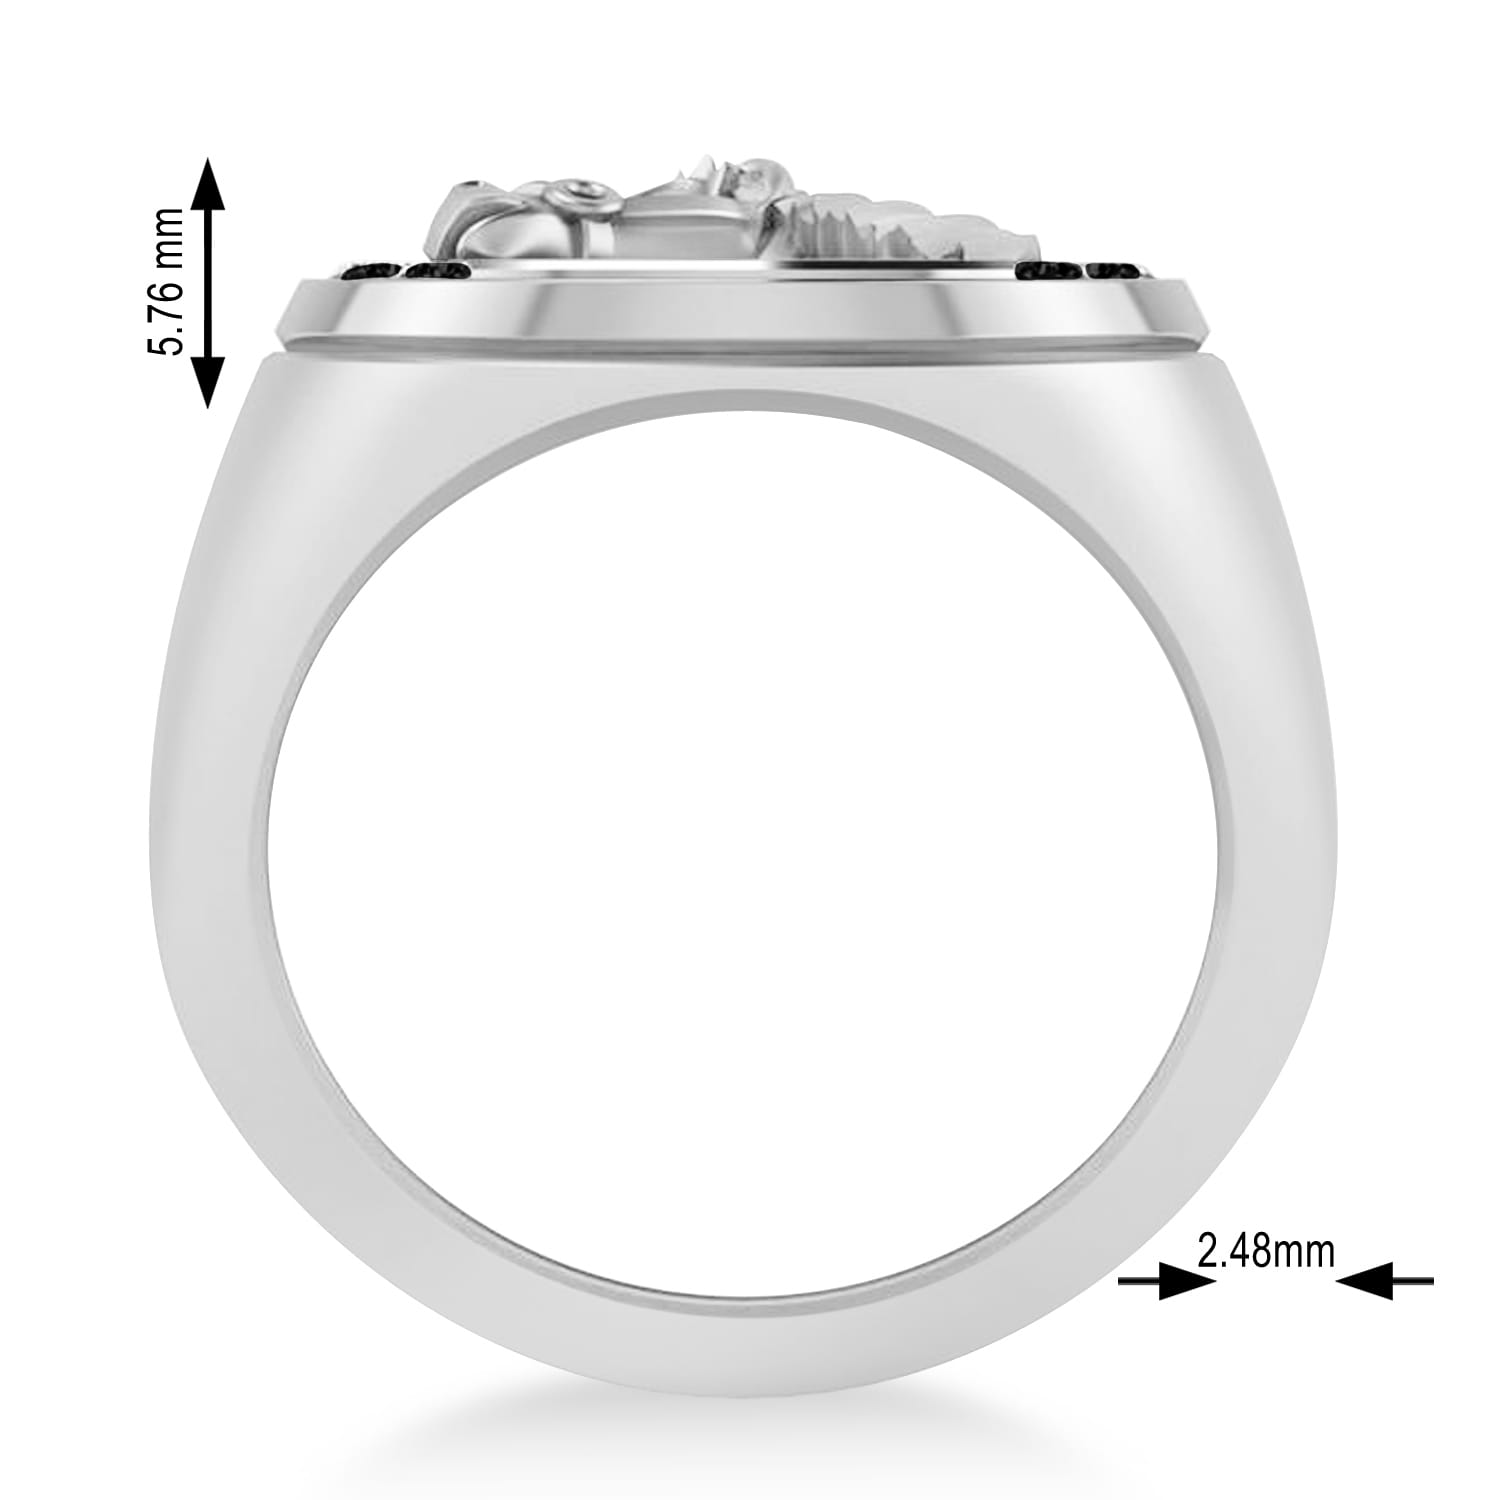 Men's Black Diamond Stallion & Horseshoe Fashion Ring 14k White Gold (0.36 ctw)